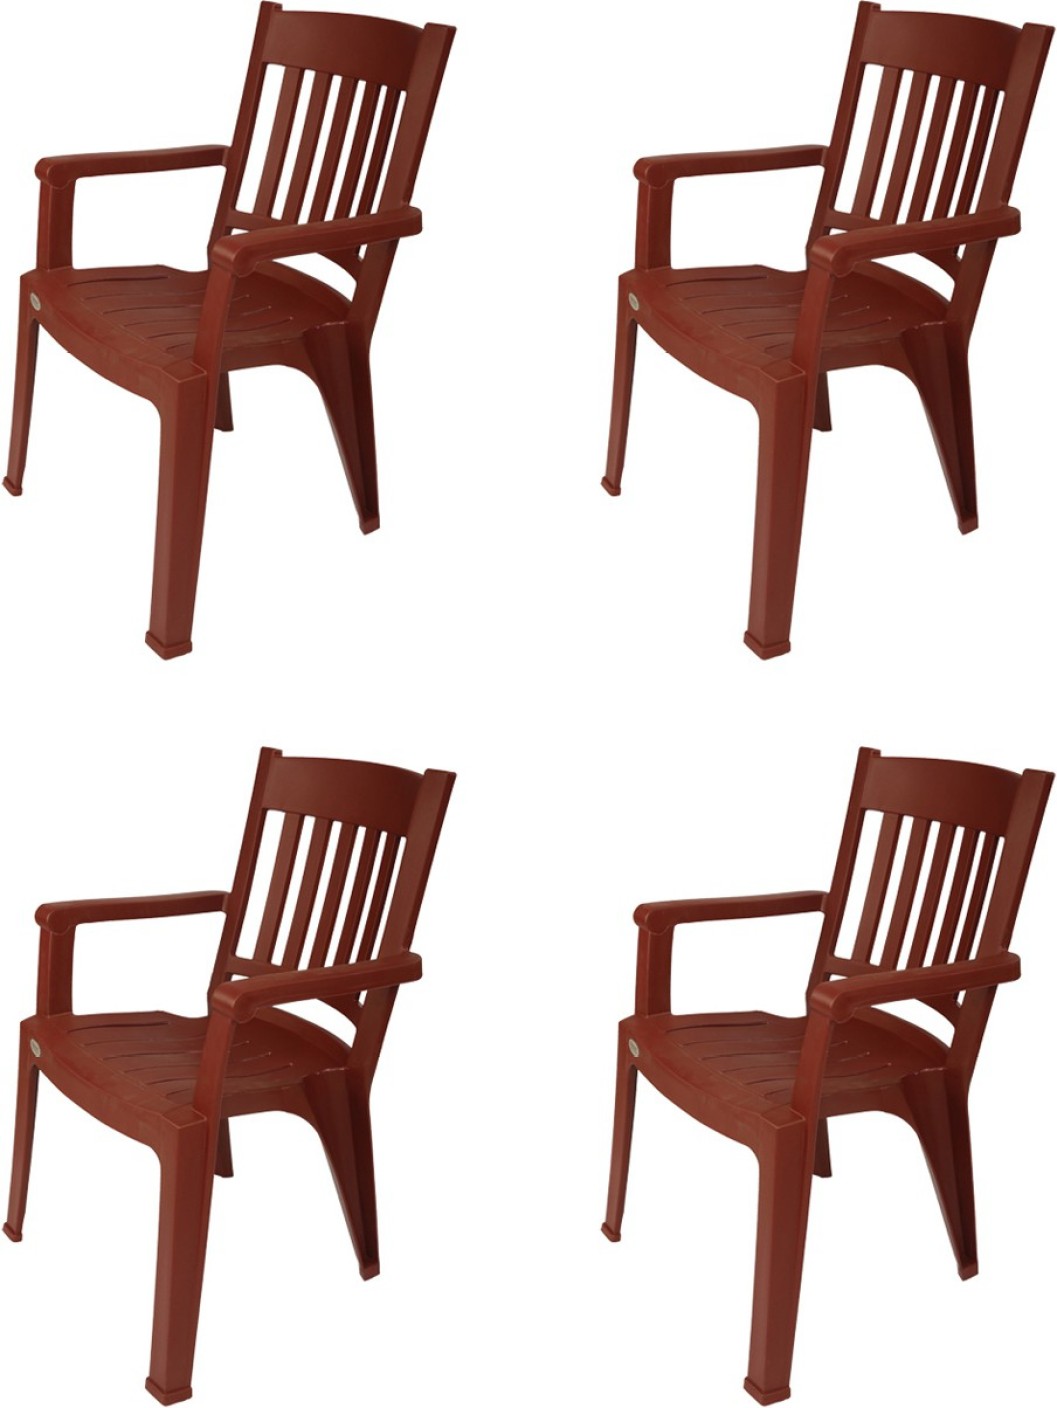 Supreme Wisdom Plastic Outdoor Chair Price in India - Buy Supreme Wisdom Plastic Outdoor Chair 